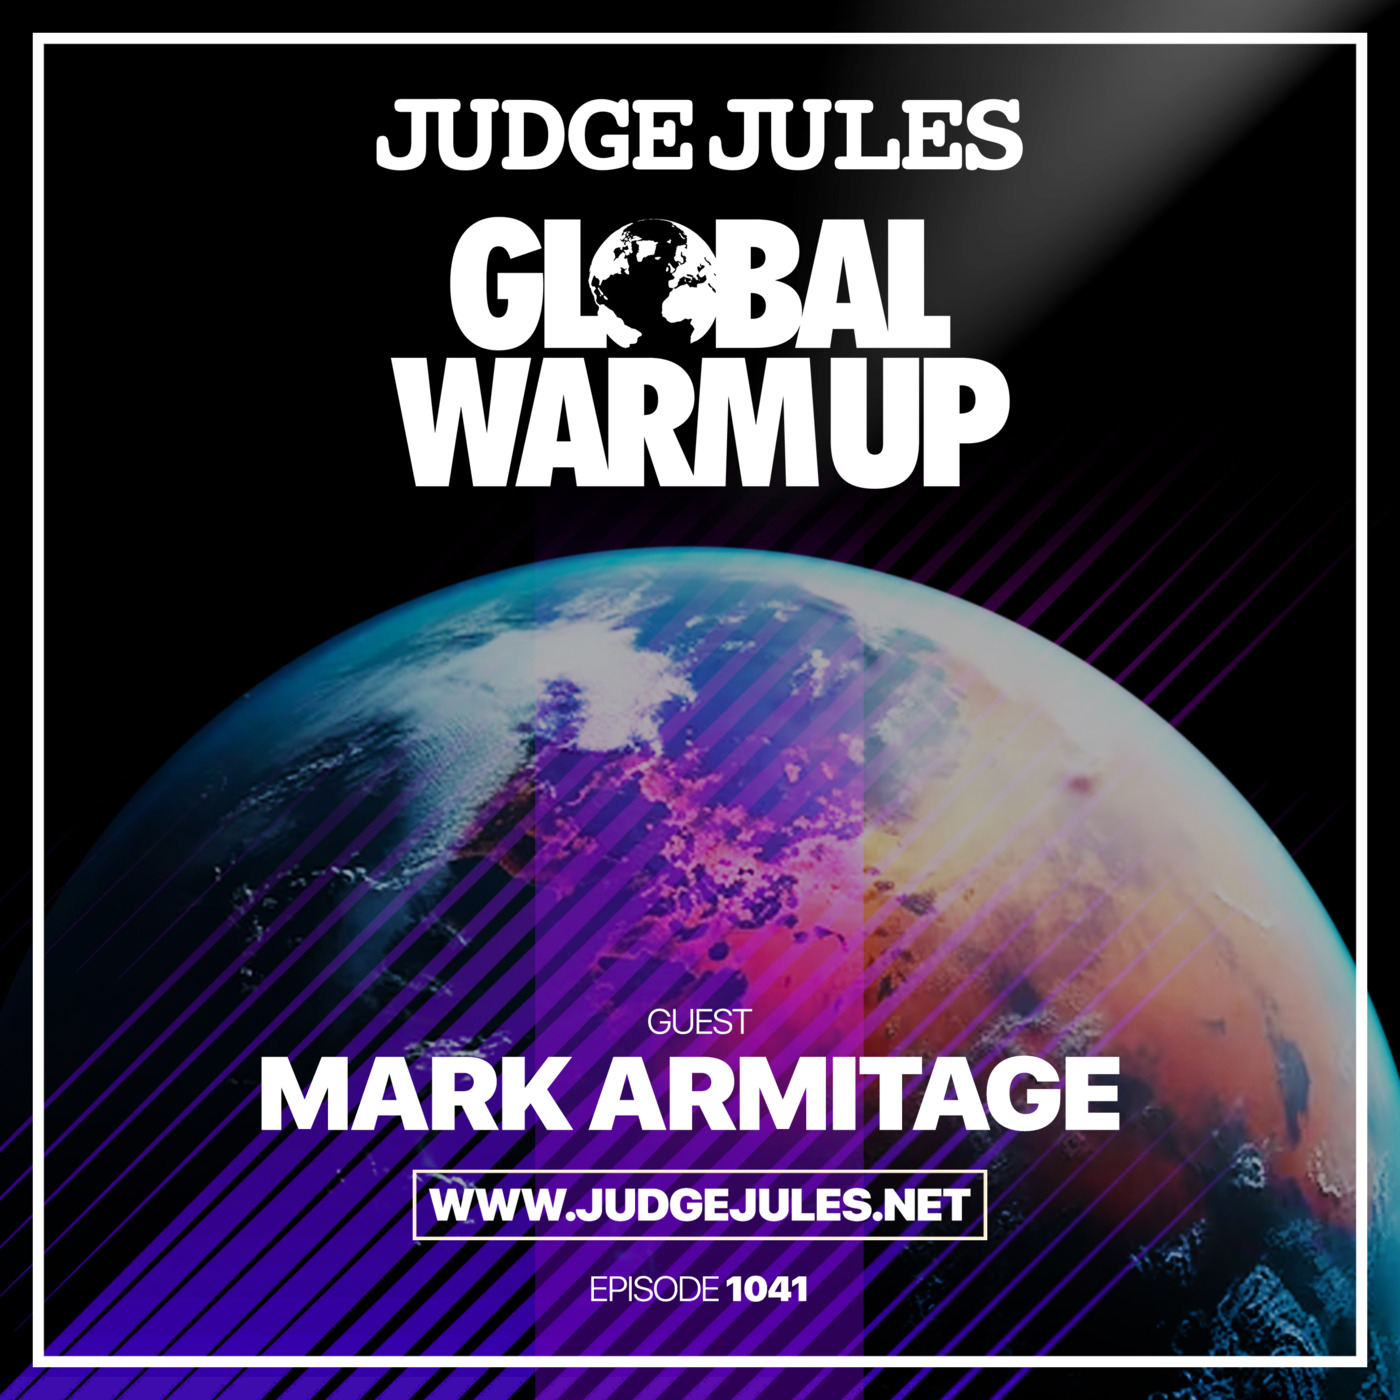 Episode 1041: JUDGE JULES PRESENTS THE GLOBAL WARM UP EPISODE 1041